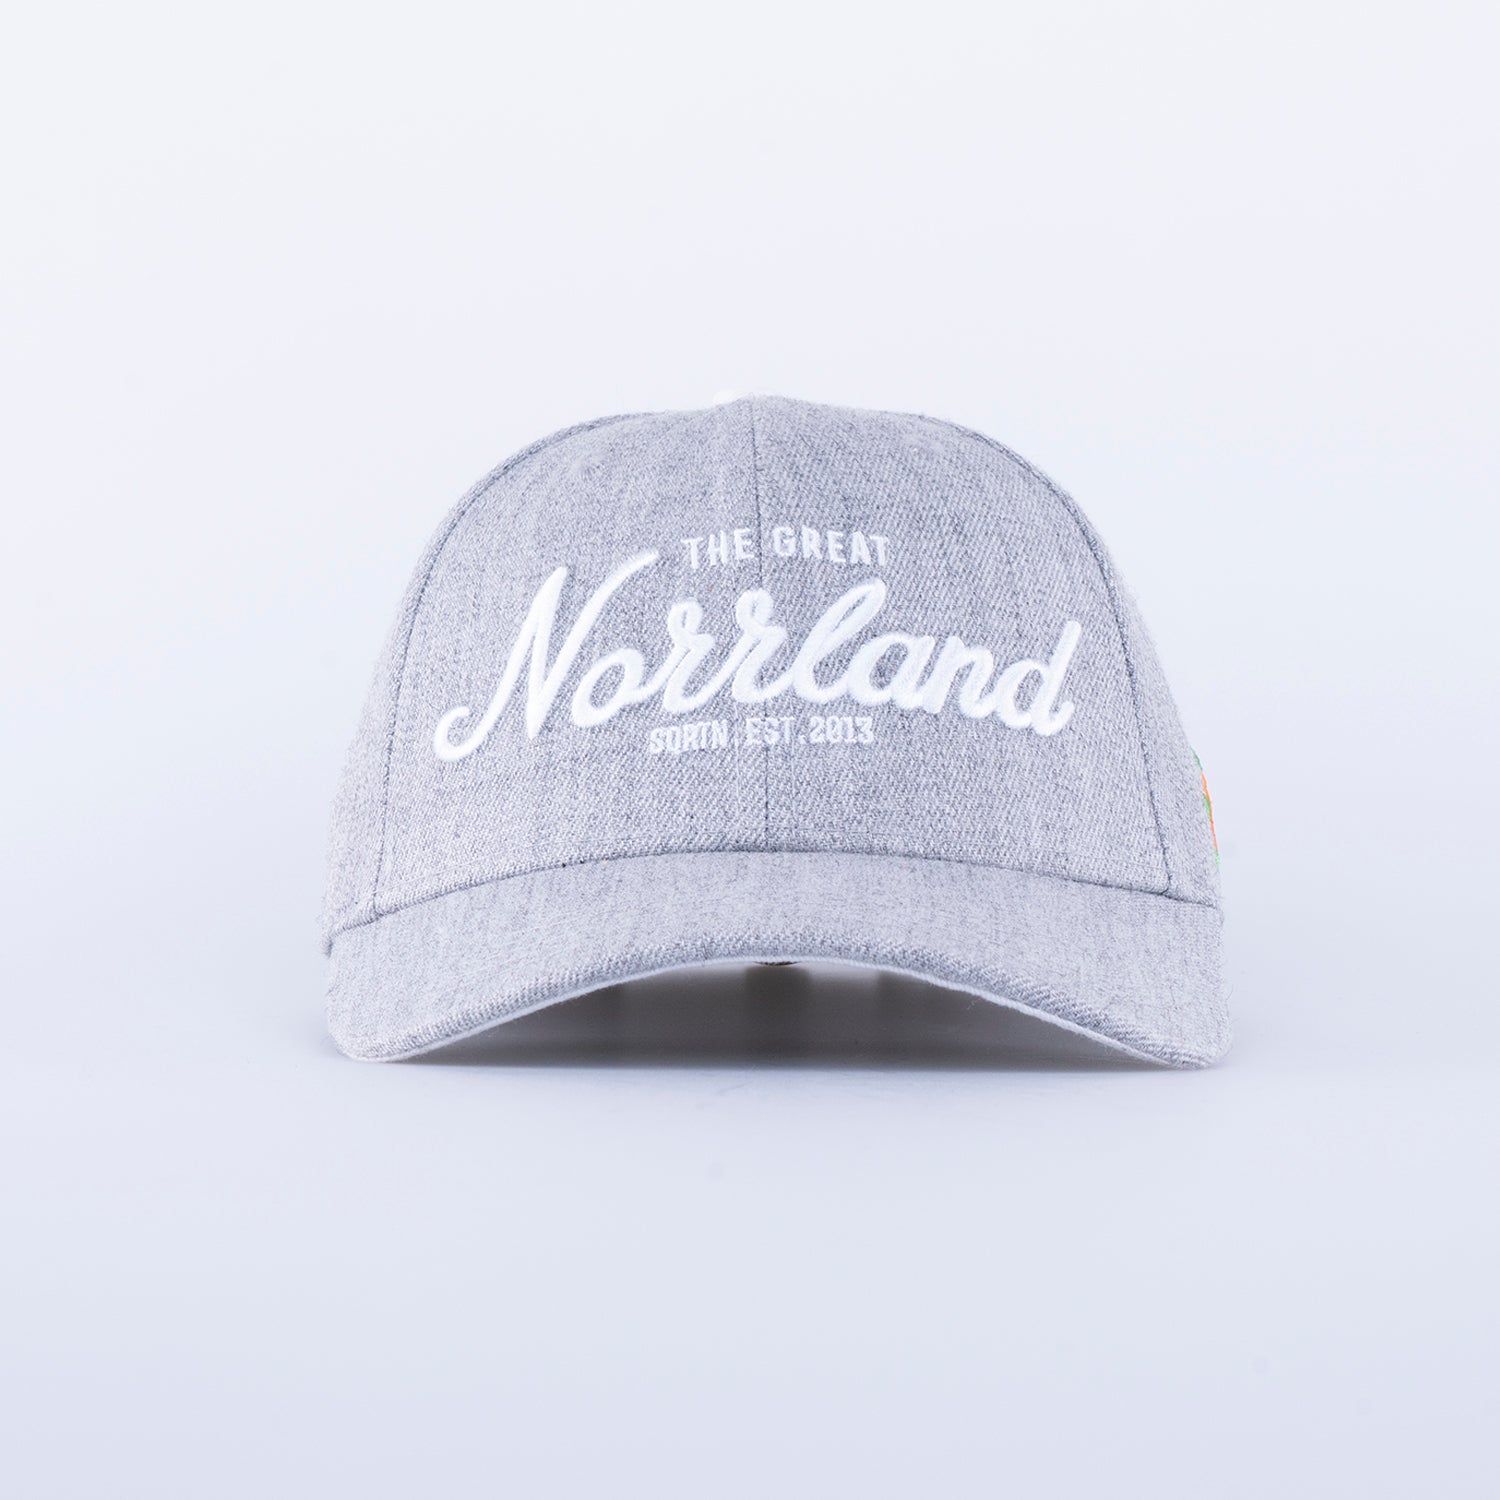 GREAT NORRLAND CAP - HOOKED GREY